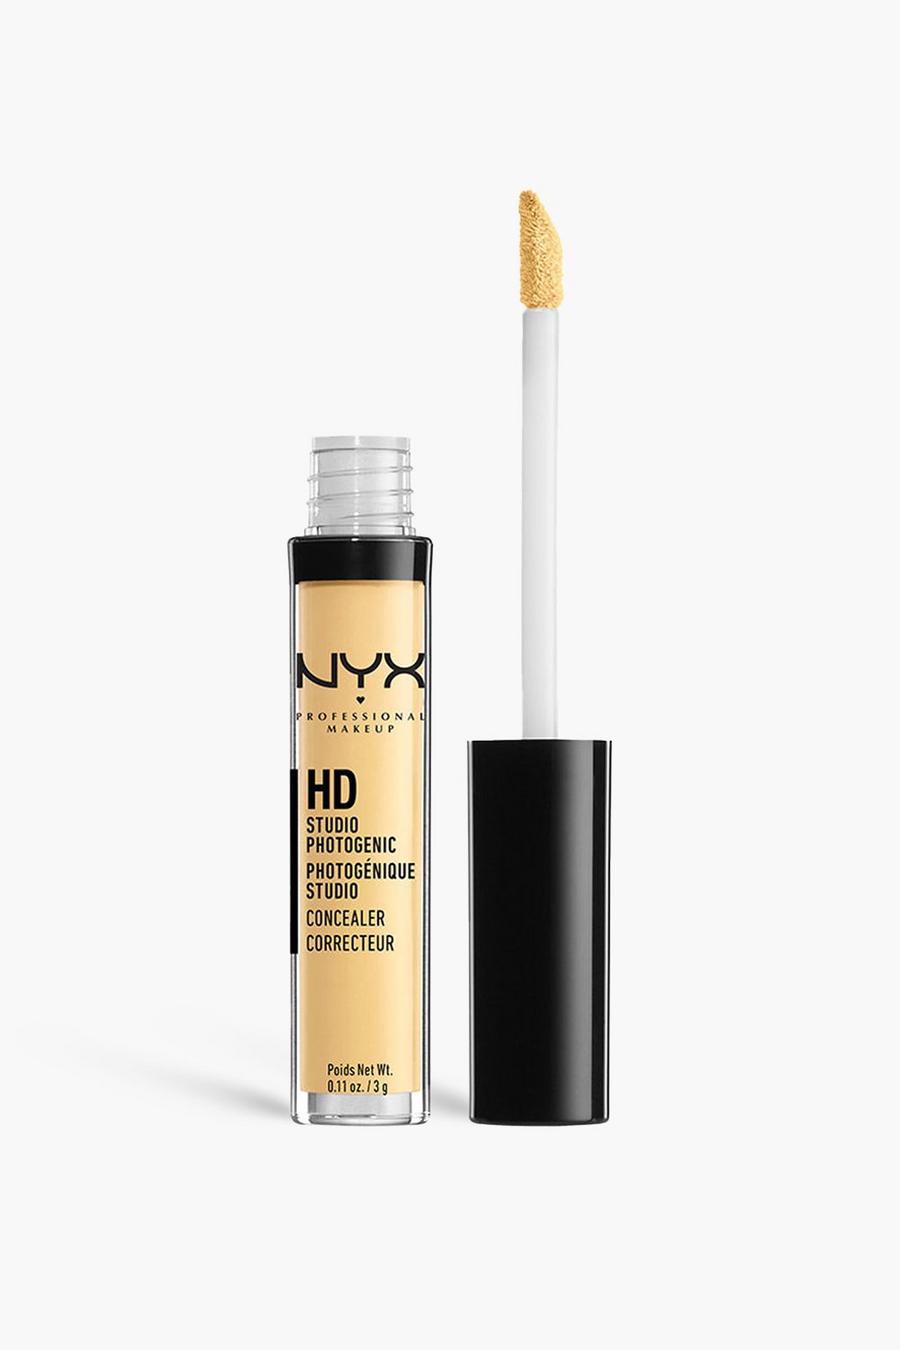 10 צהוב שרביט קונסילר NYX Professional Makeup HD Photogenic